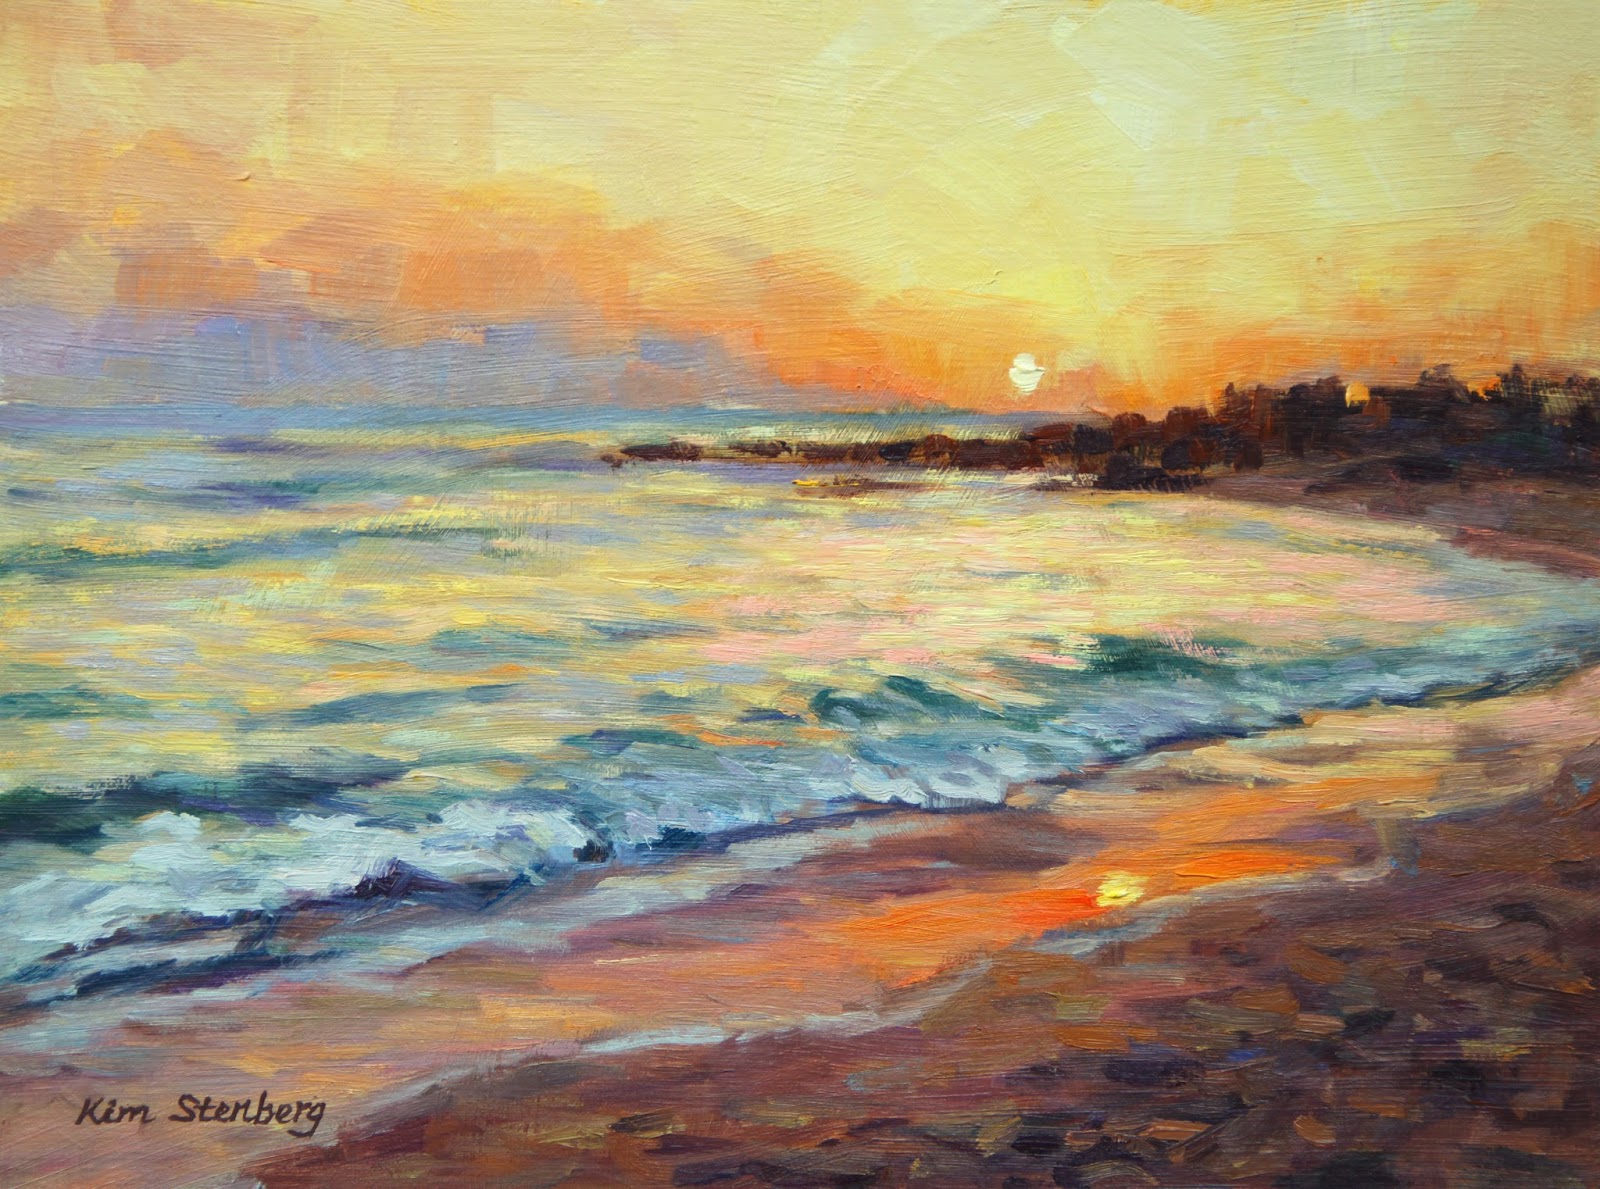 Kim Stenberg's Painting Journal "Sunset Beach" (oil on